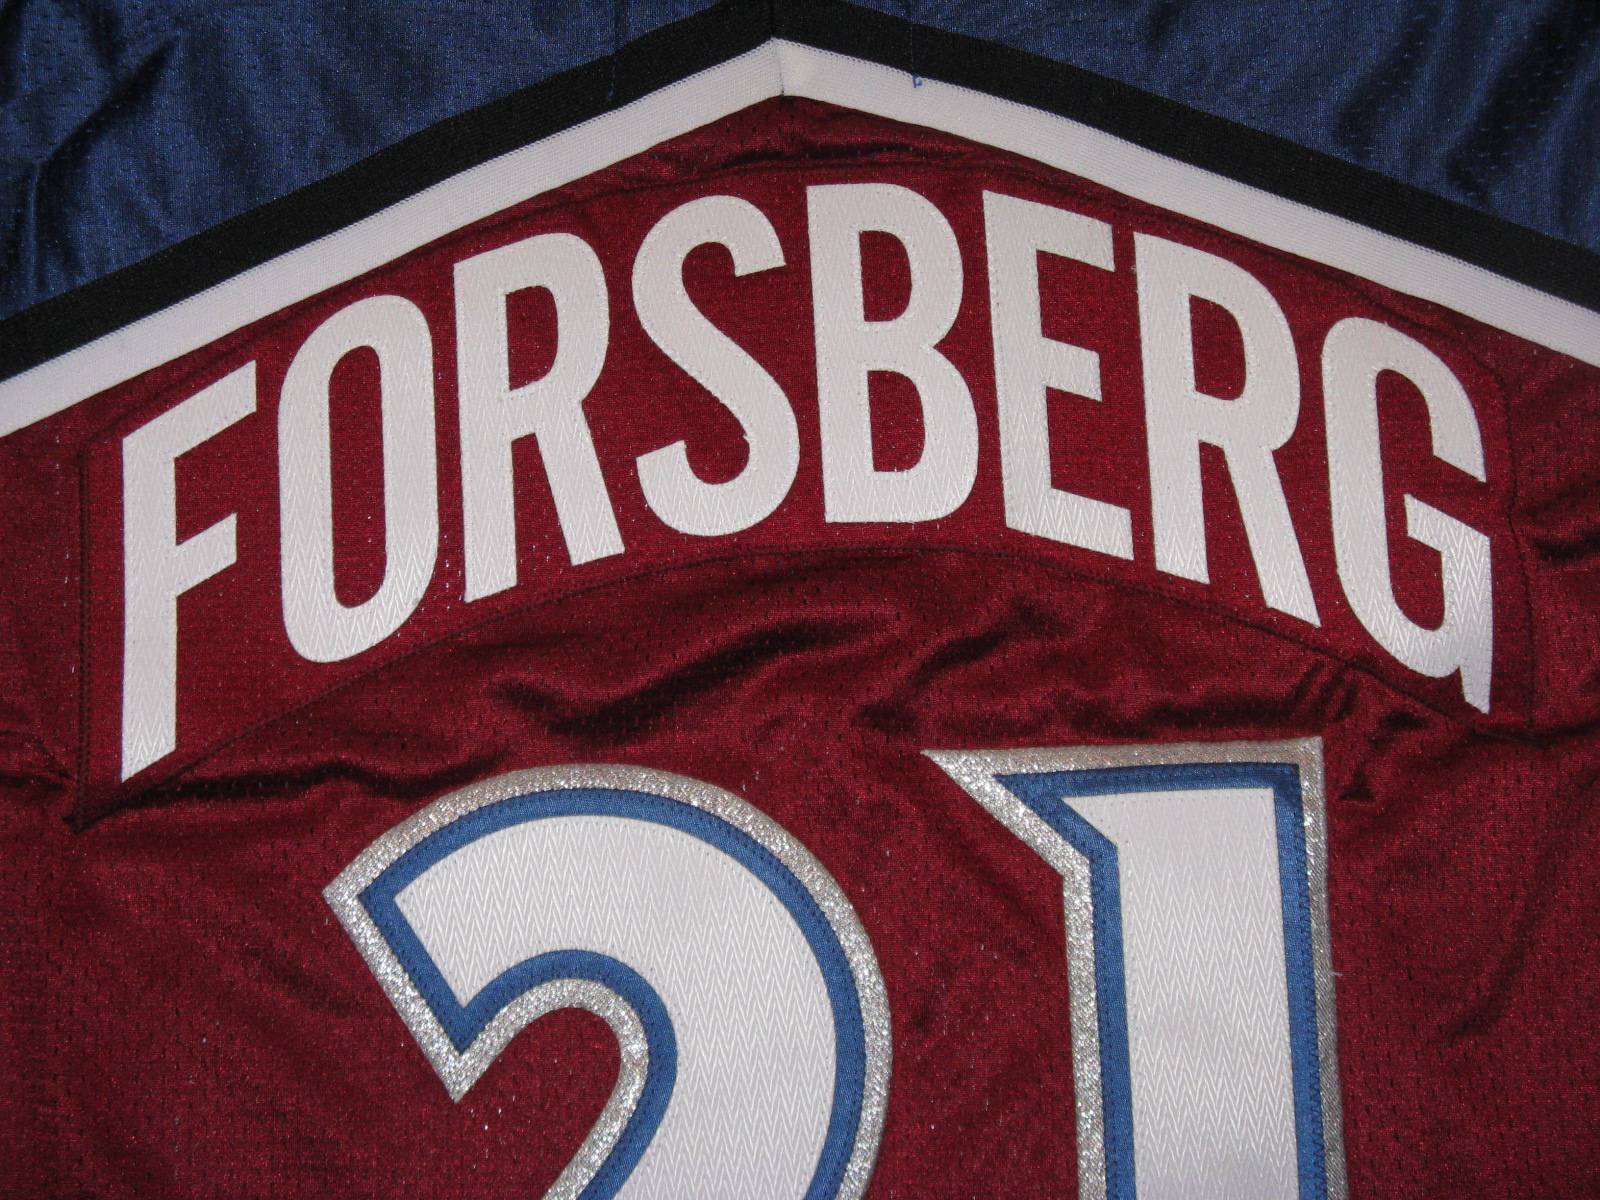 peter forsberg jersey numbers